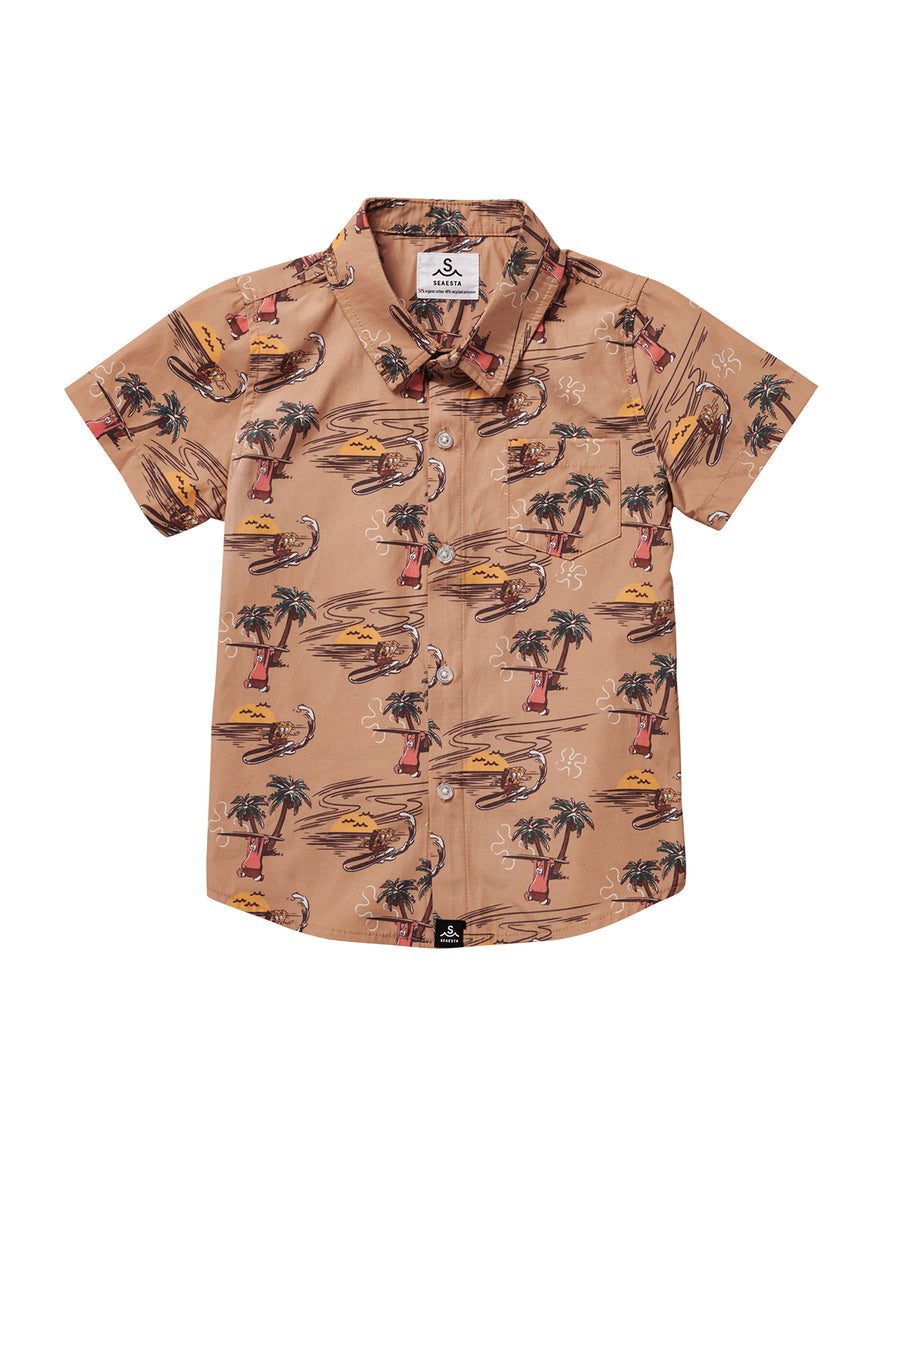 Tropical Brazil T-Shirt Men -Image by Shutterstock, Male x-Large 